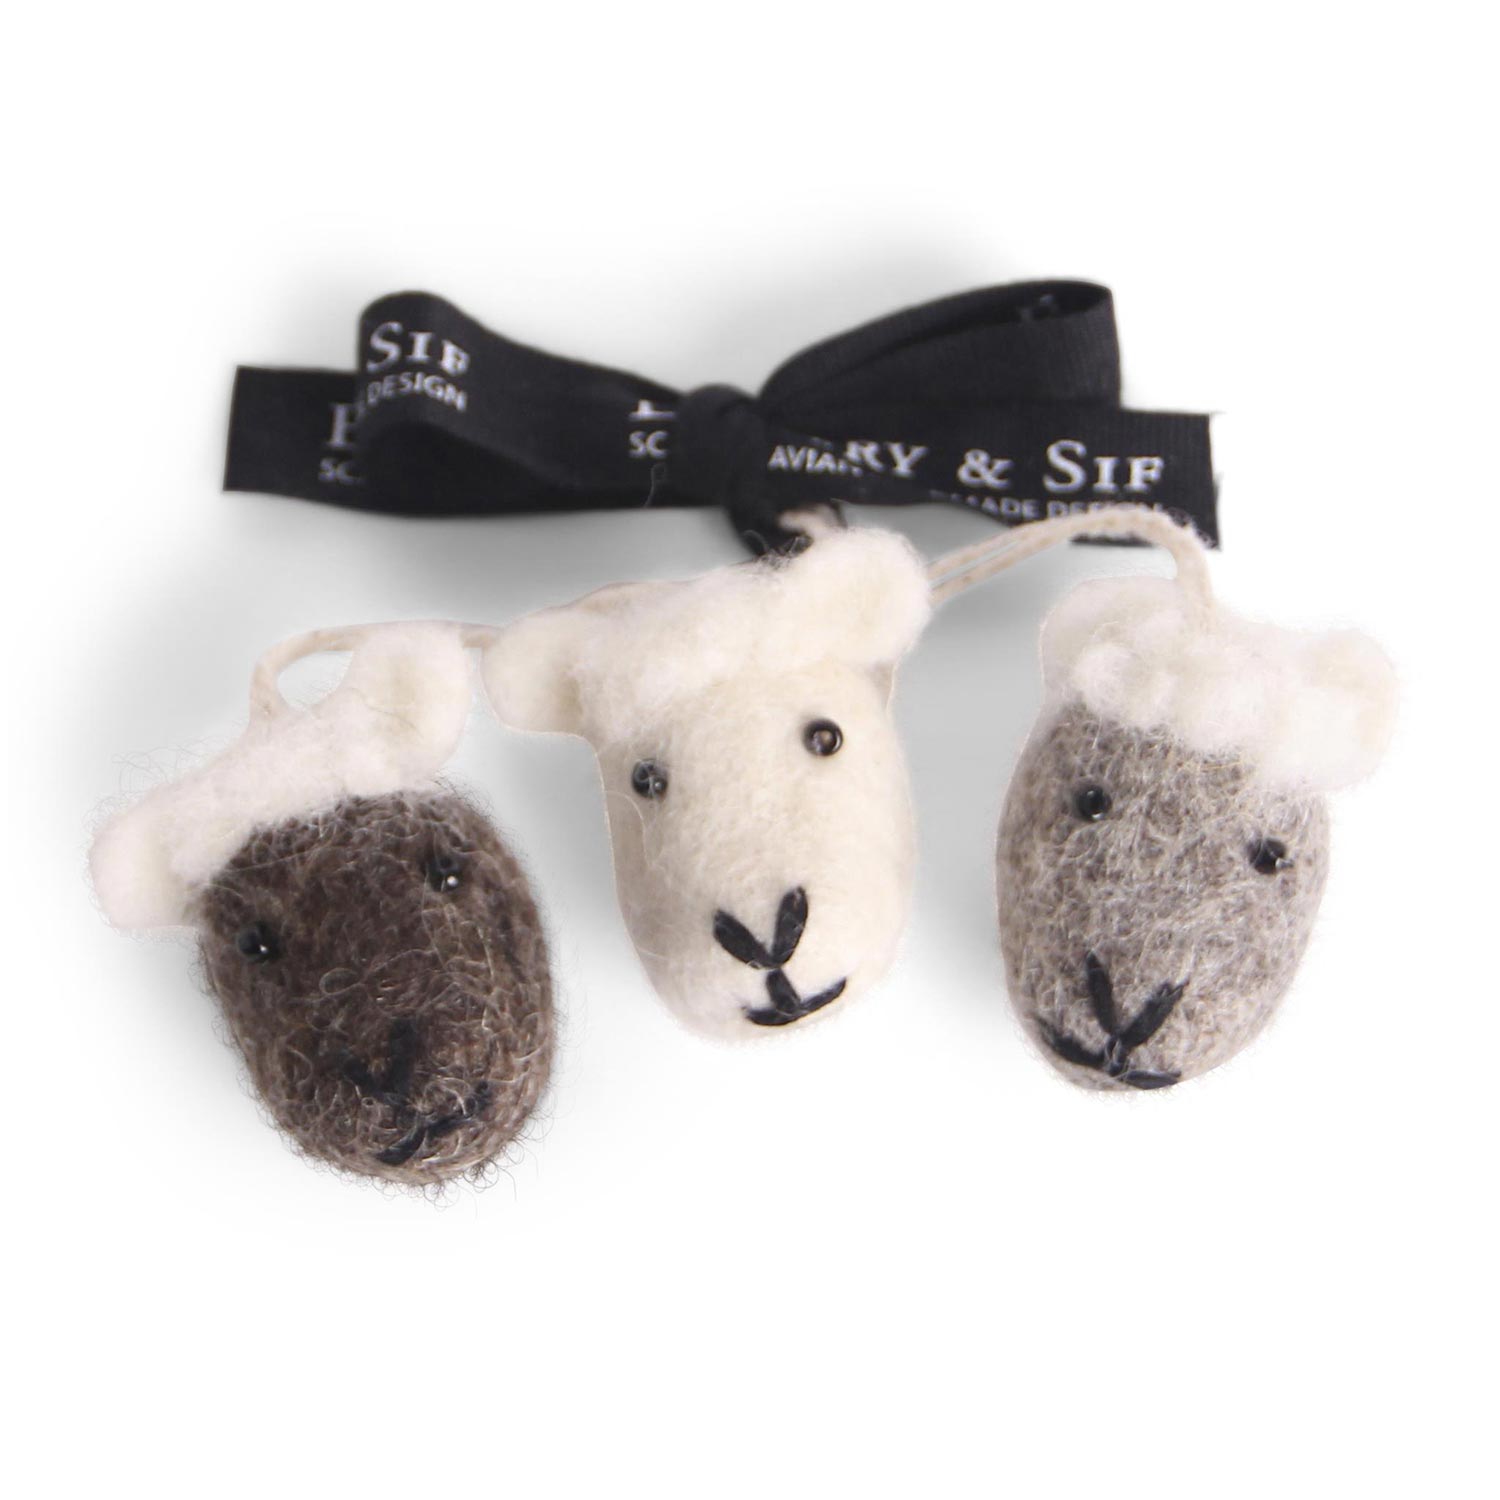 En Gry & Sif set of 3 felt sheep faces, 1 white, 1 dark & 1 light grey